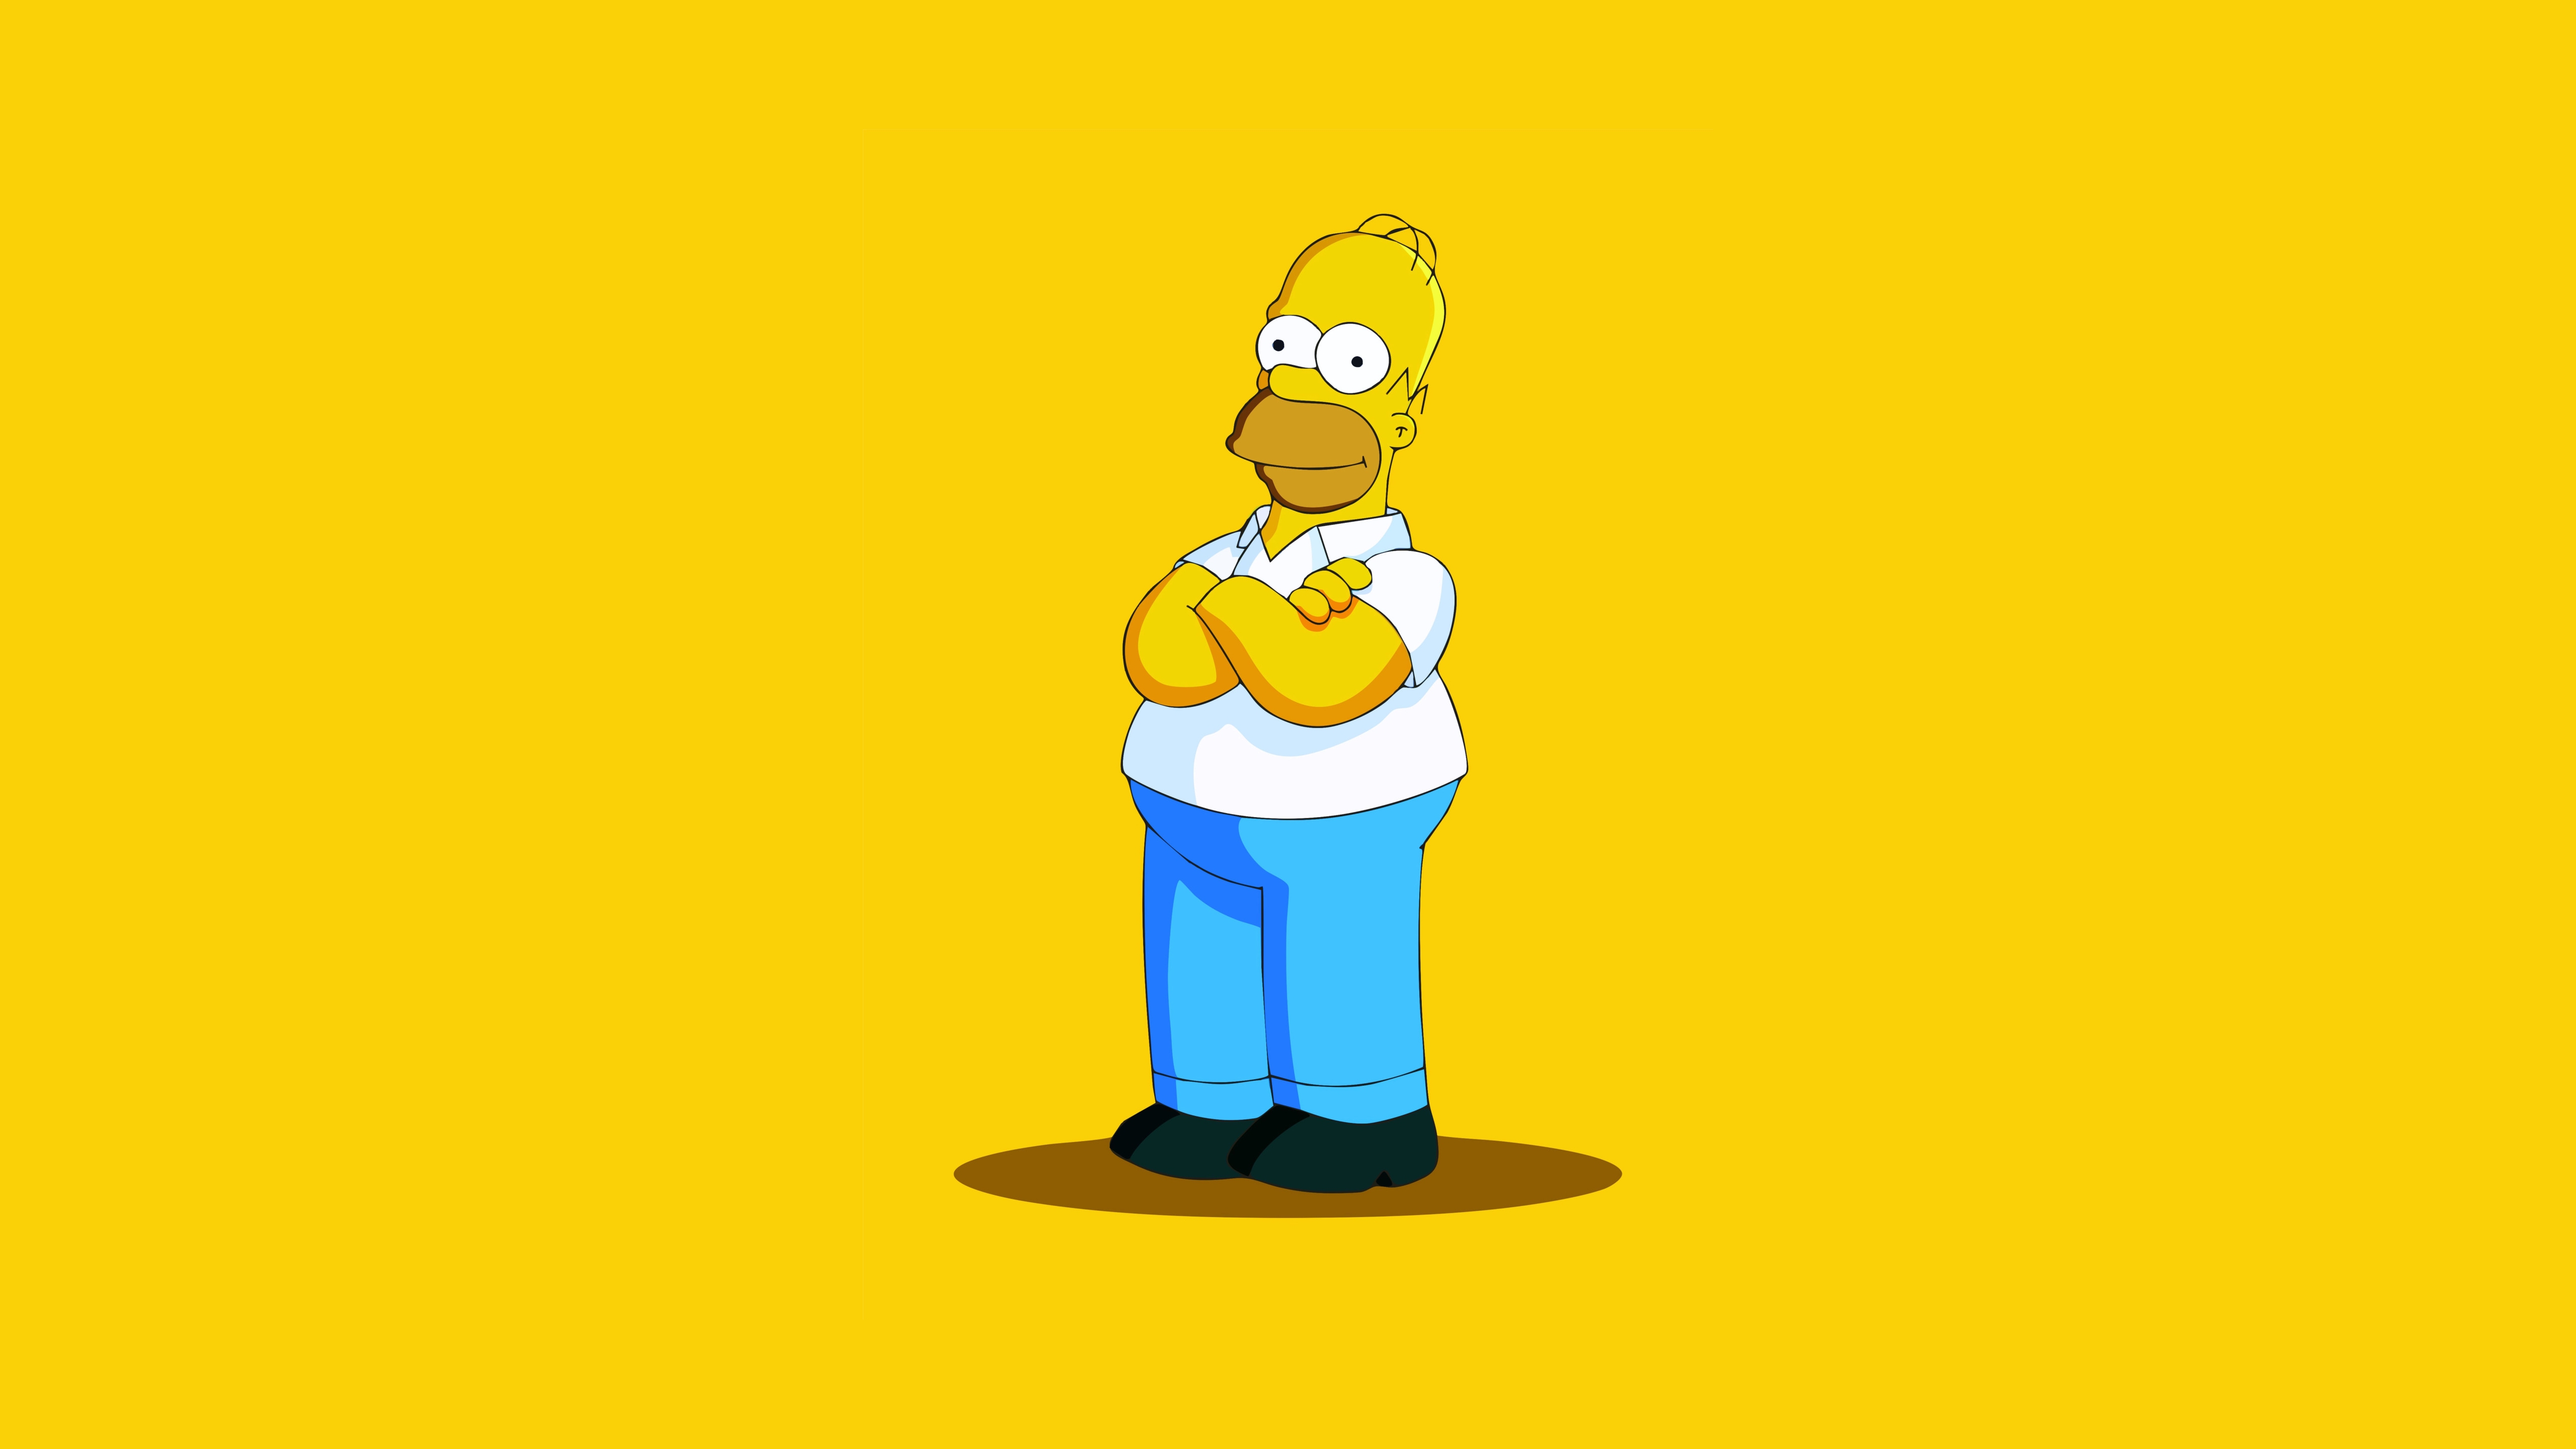 HD wallpaper, Simple, The Simpsons, Yellow Background, Minimalist, 5K, Homer Simpson